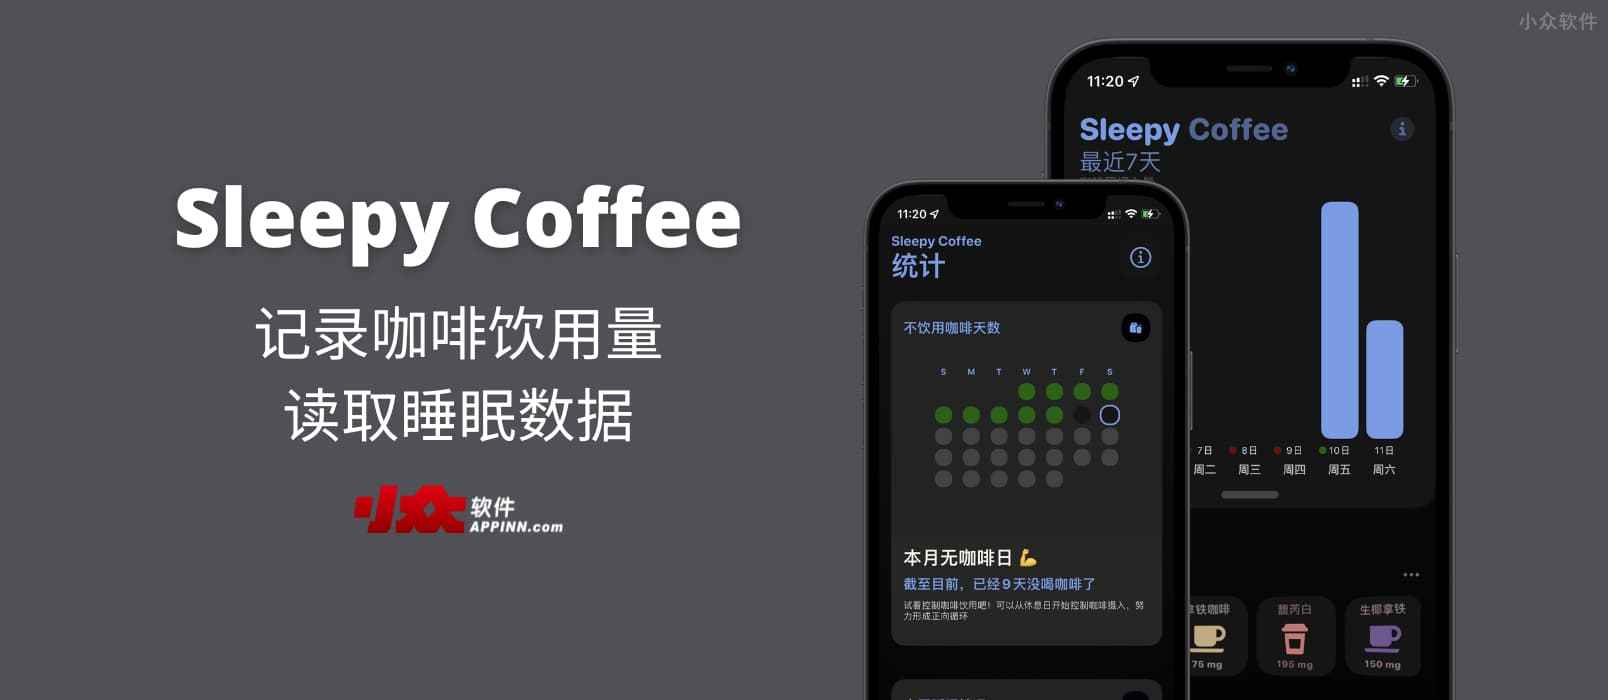 Sleepy Coffee – 记录咖啡饮用量，读取睡眠数据，揭开咖啡与睡眠的关系[iPhone]